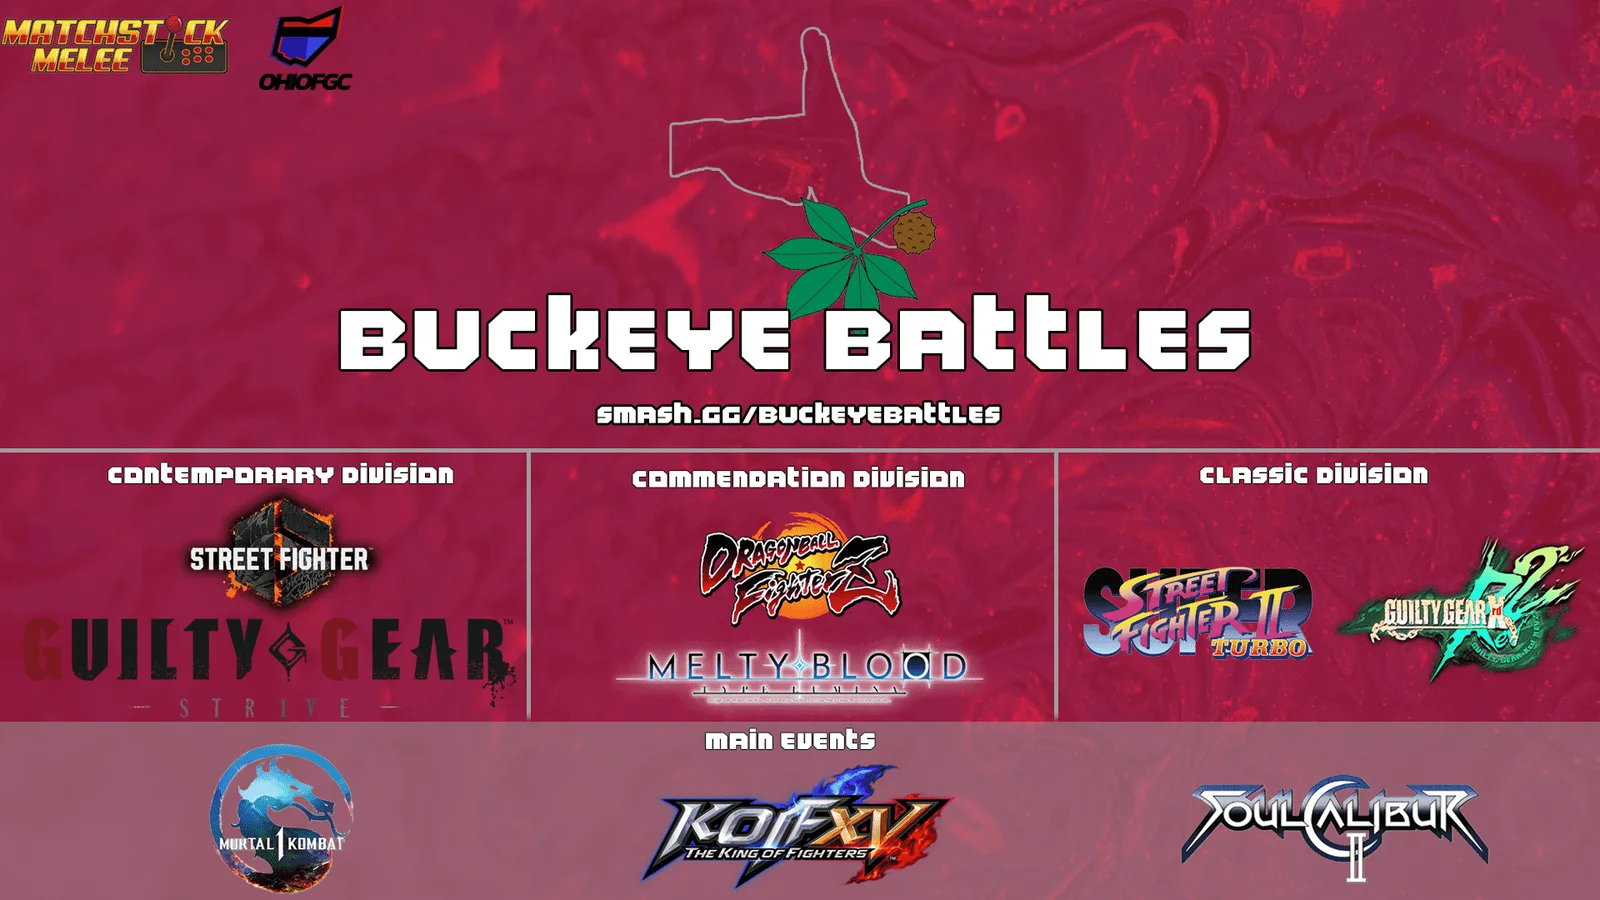 Buckeye Battles 1